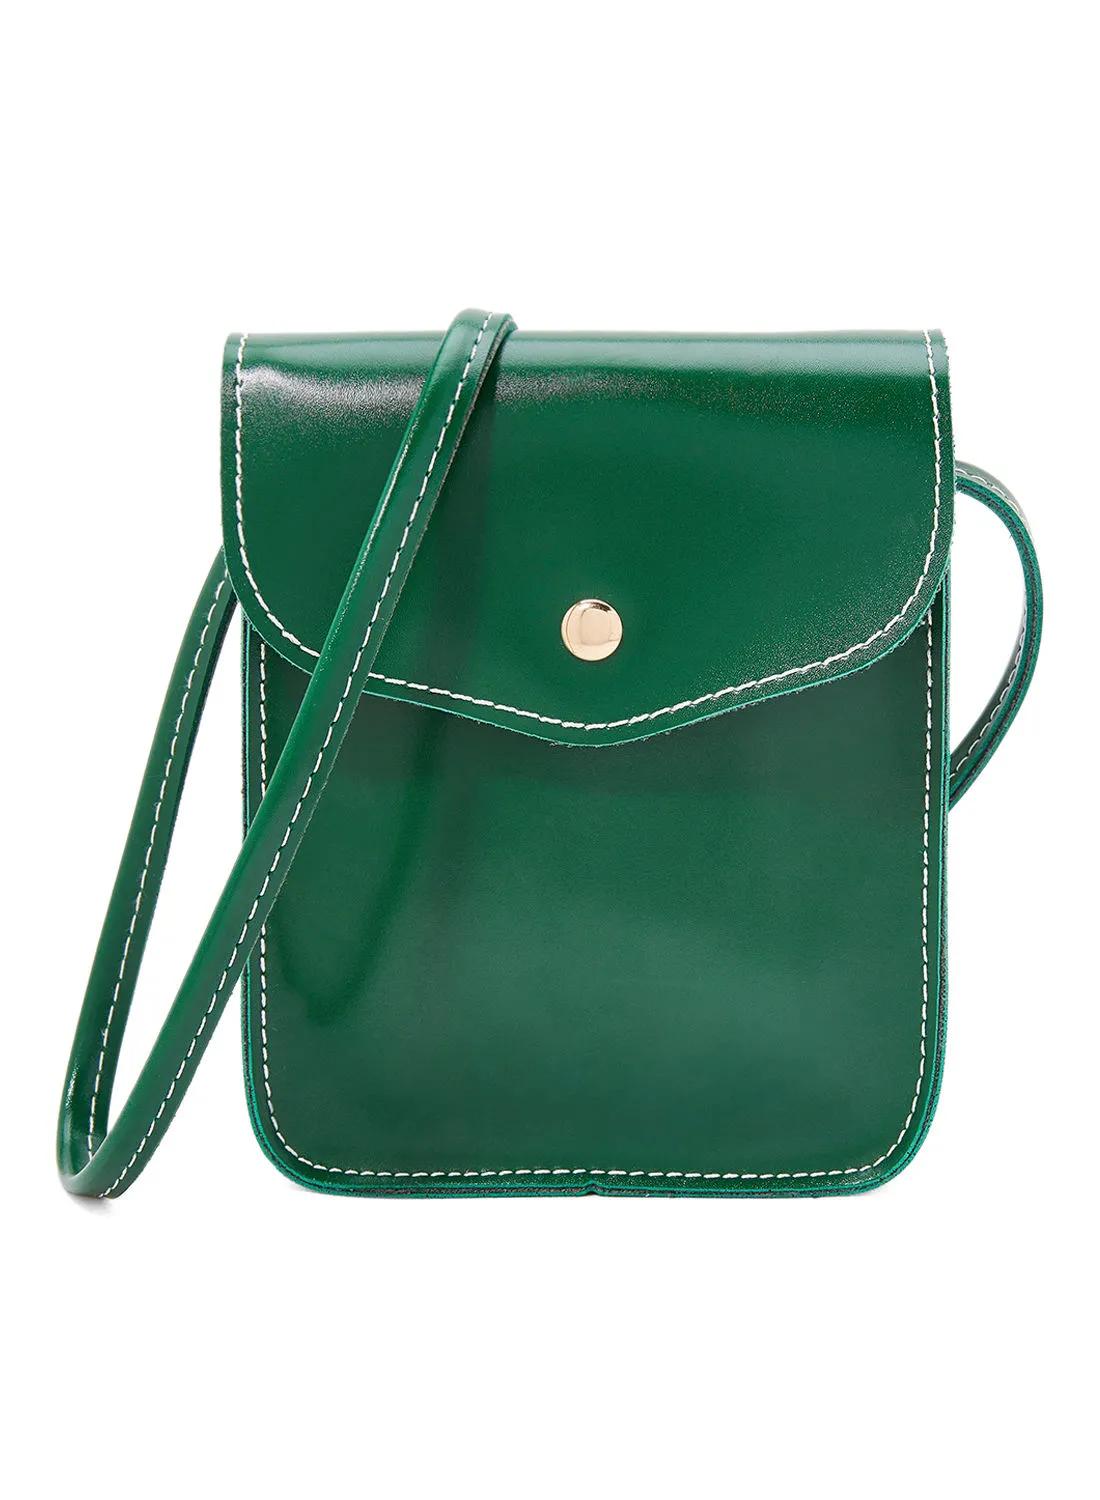 YUEJIN حقيبة كروس فريدة من نوعها باللون الأخضر